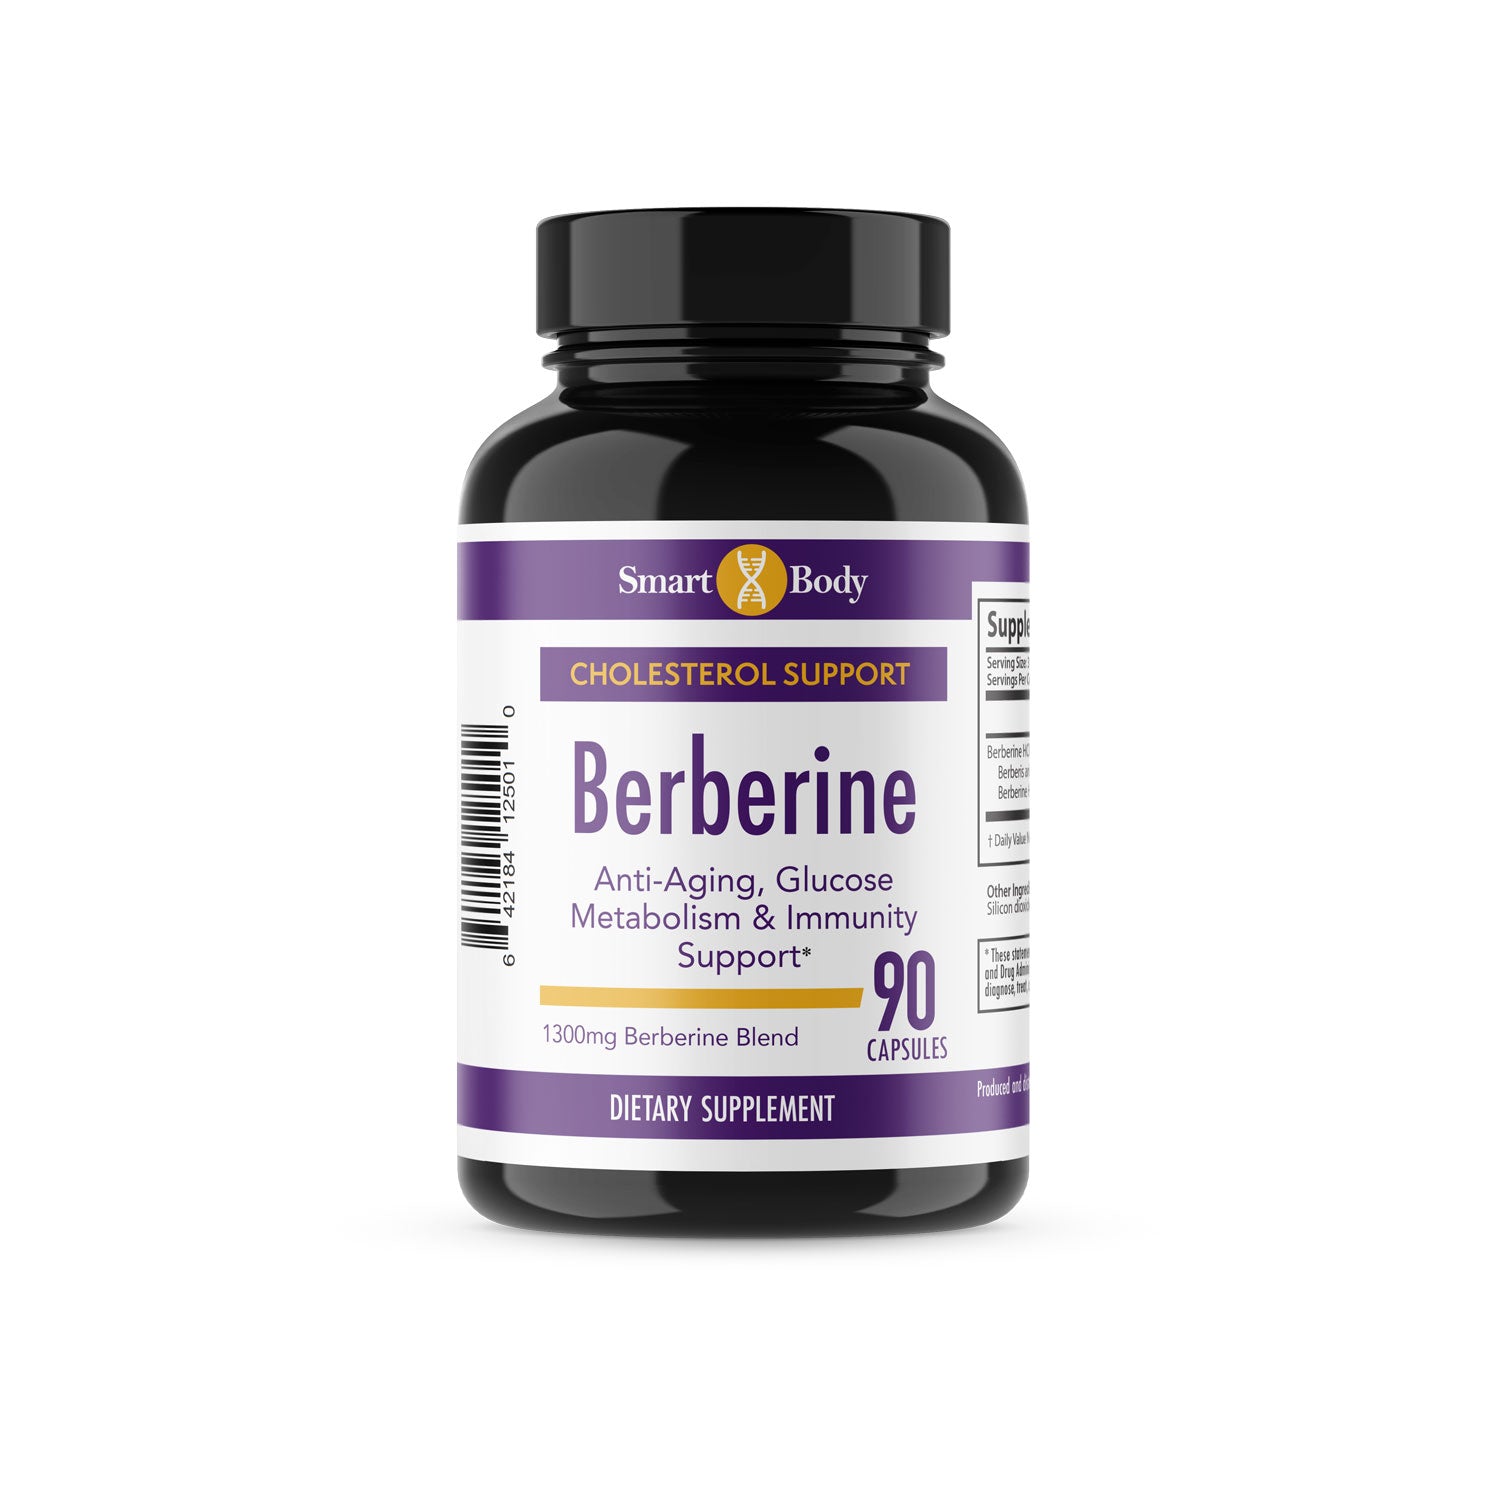 Berberine - Anti-Aging, Glucose Metabolism, Immune System Support†